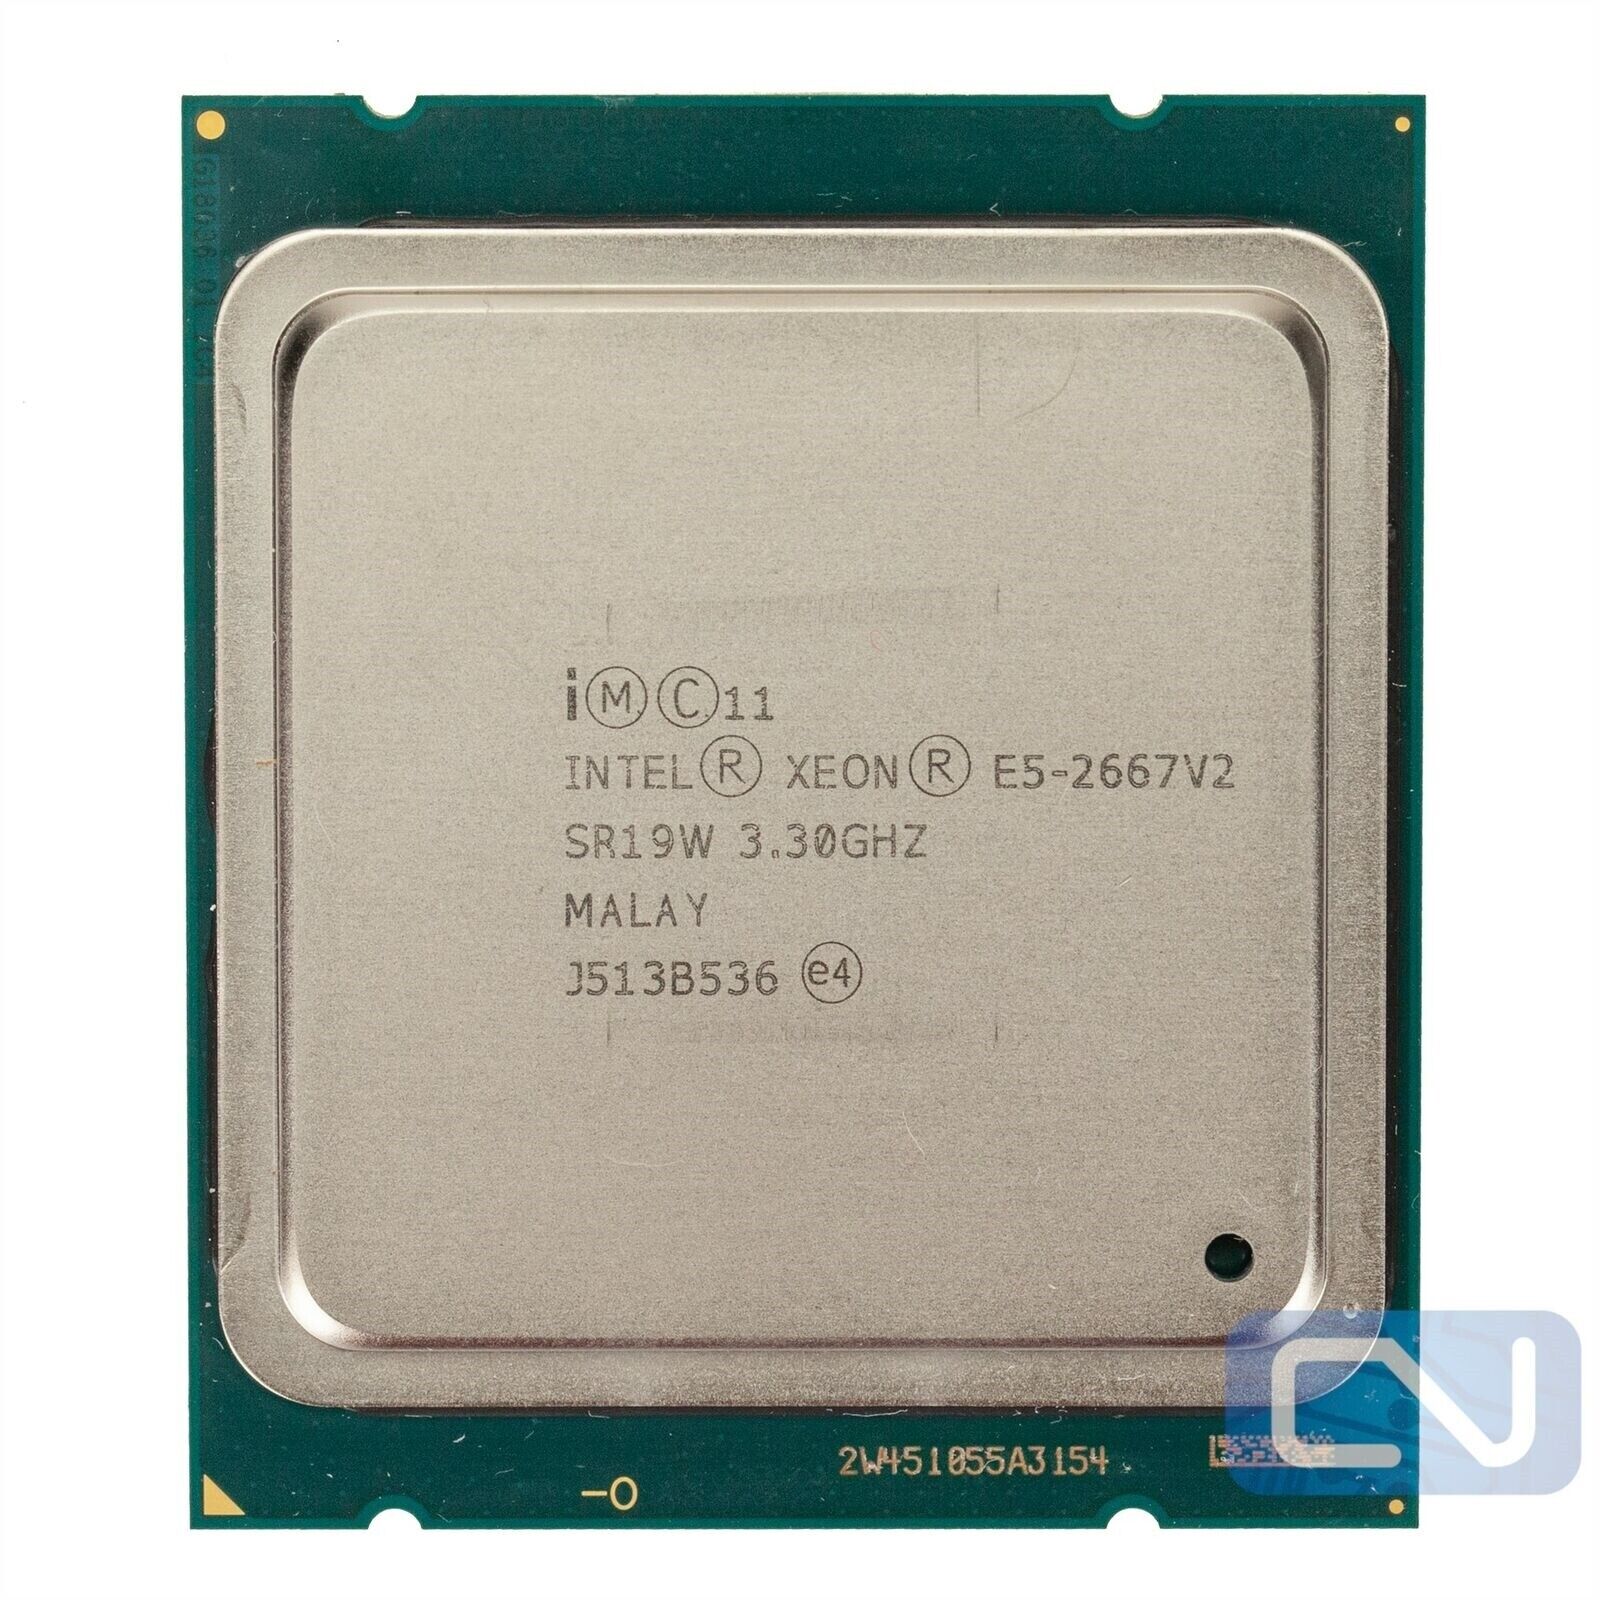 Intel Xeon E5-2667 v2 8 Core 3.30GHz 8GT/s SR19W LGA 2011 B Grade CPU Processor